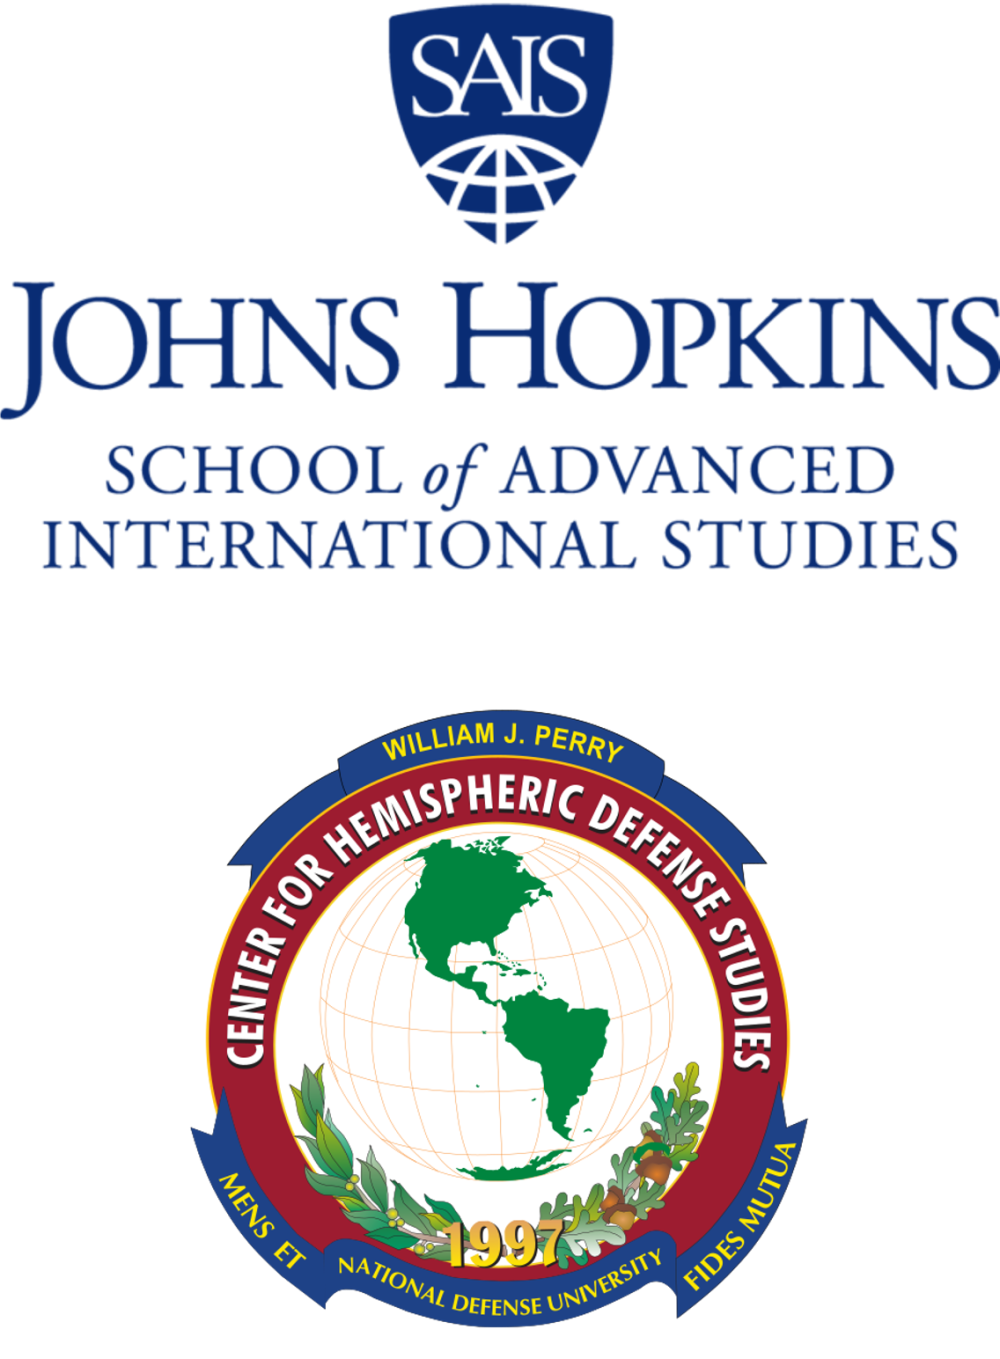 William J. Perry Center for Hemispheric Defense Studies & Johns Hopkins School of Advanced International Studies